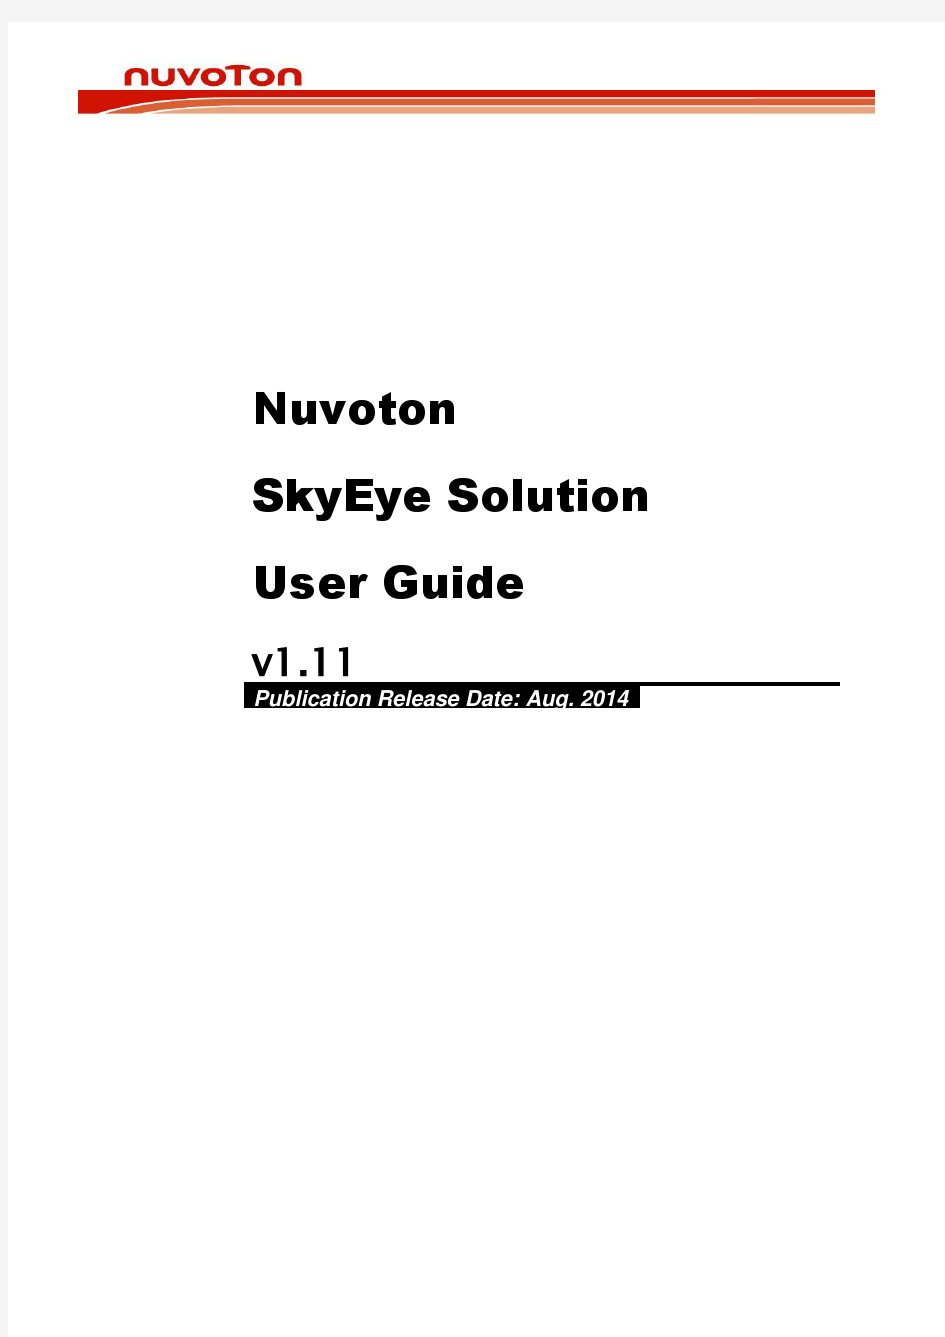 Nuvoton SkyEye Solution User Guide